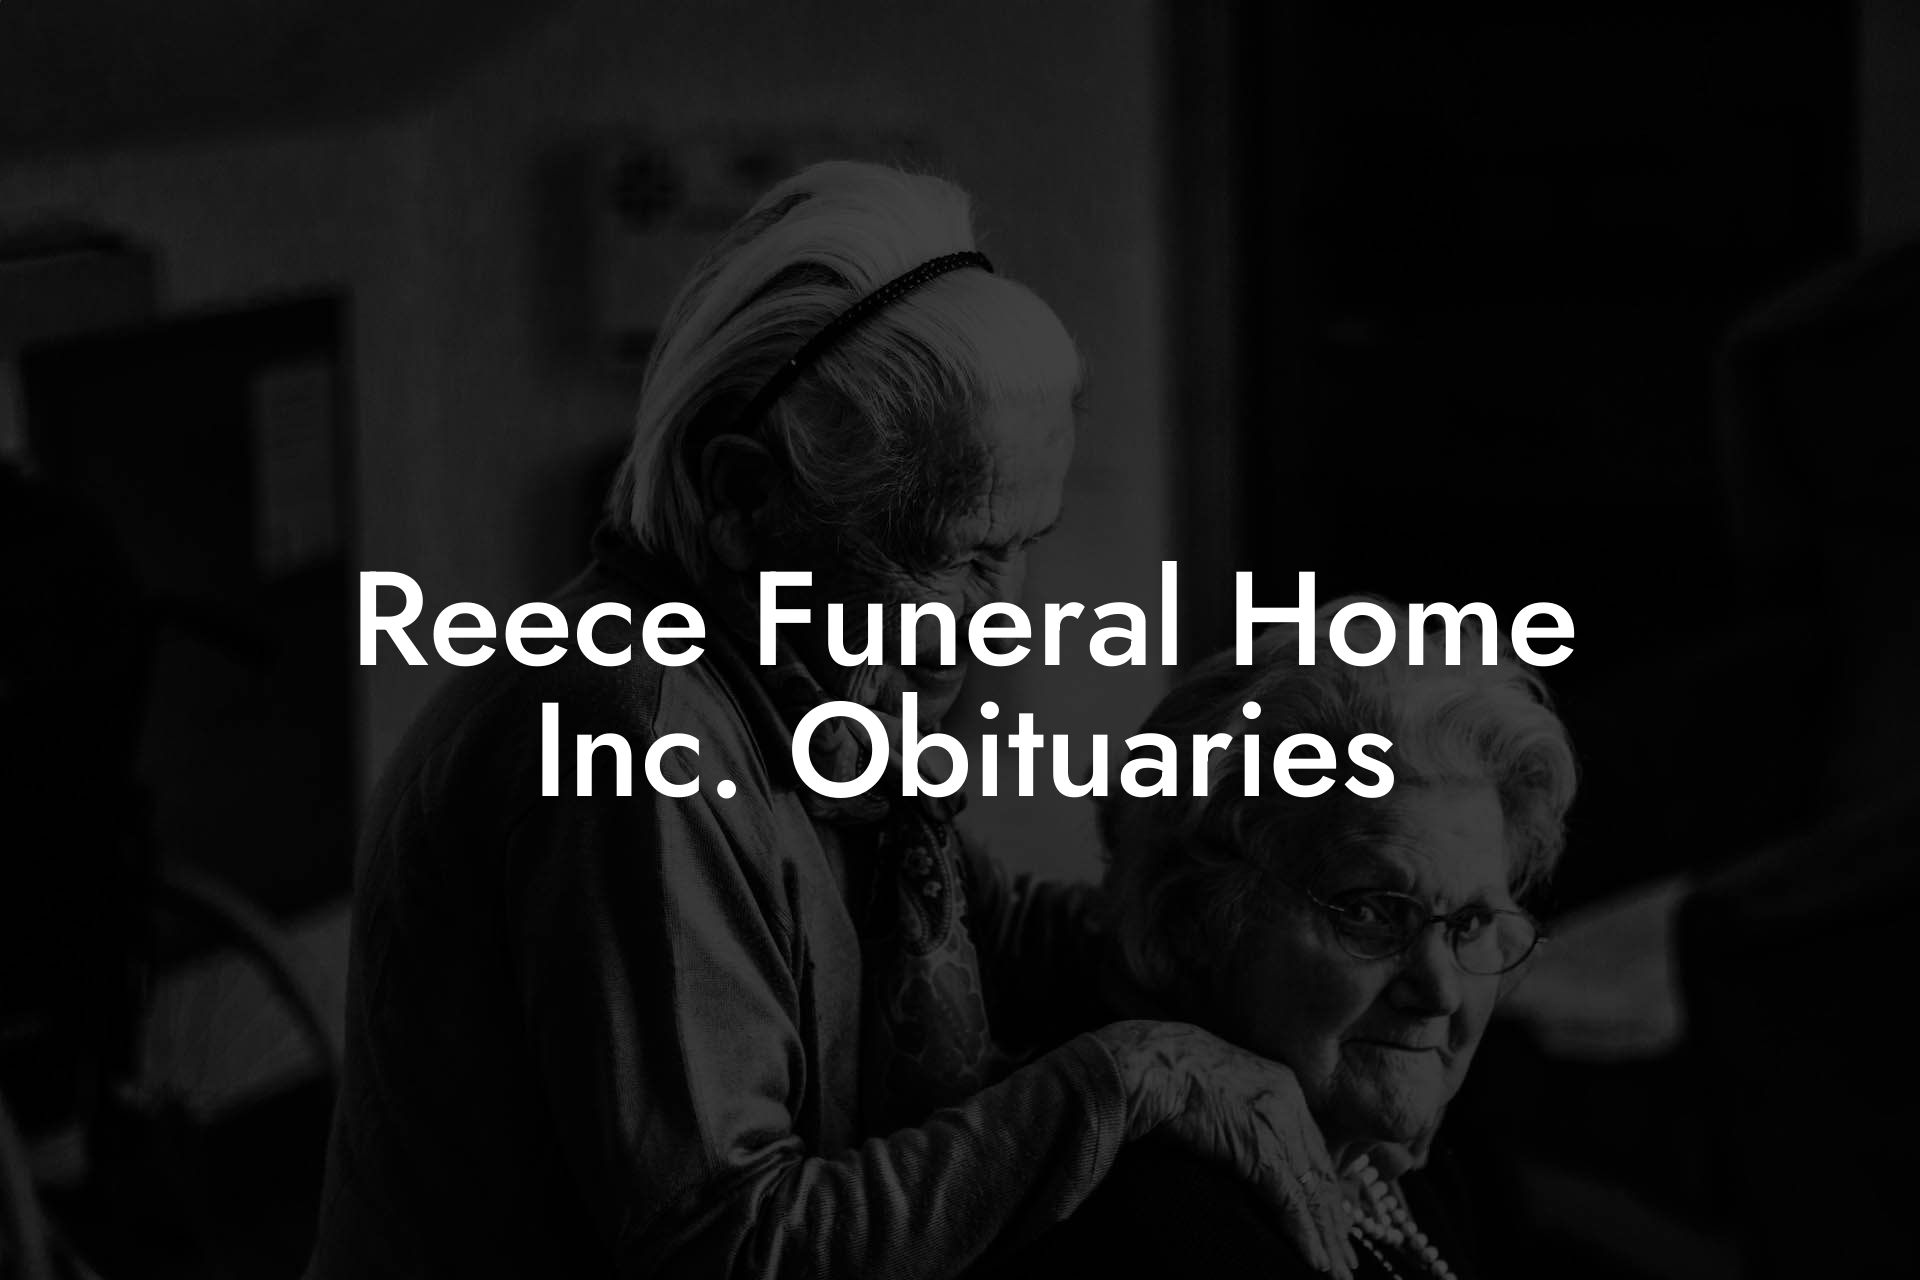 Reece Funeral Home Inc. Obituaries